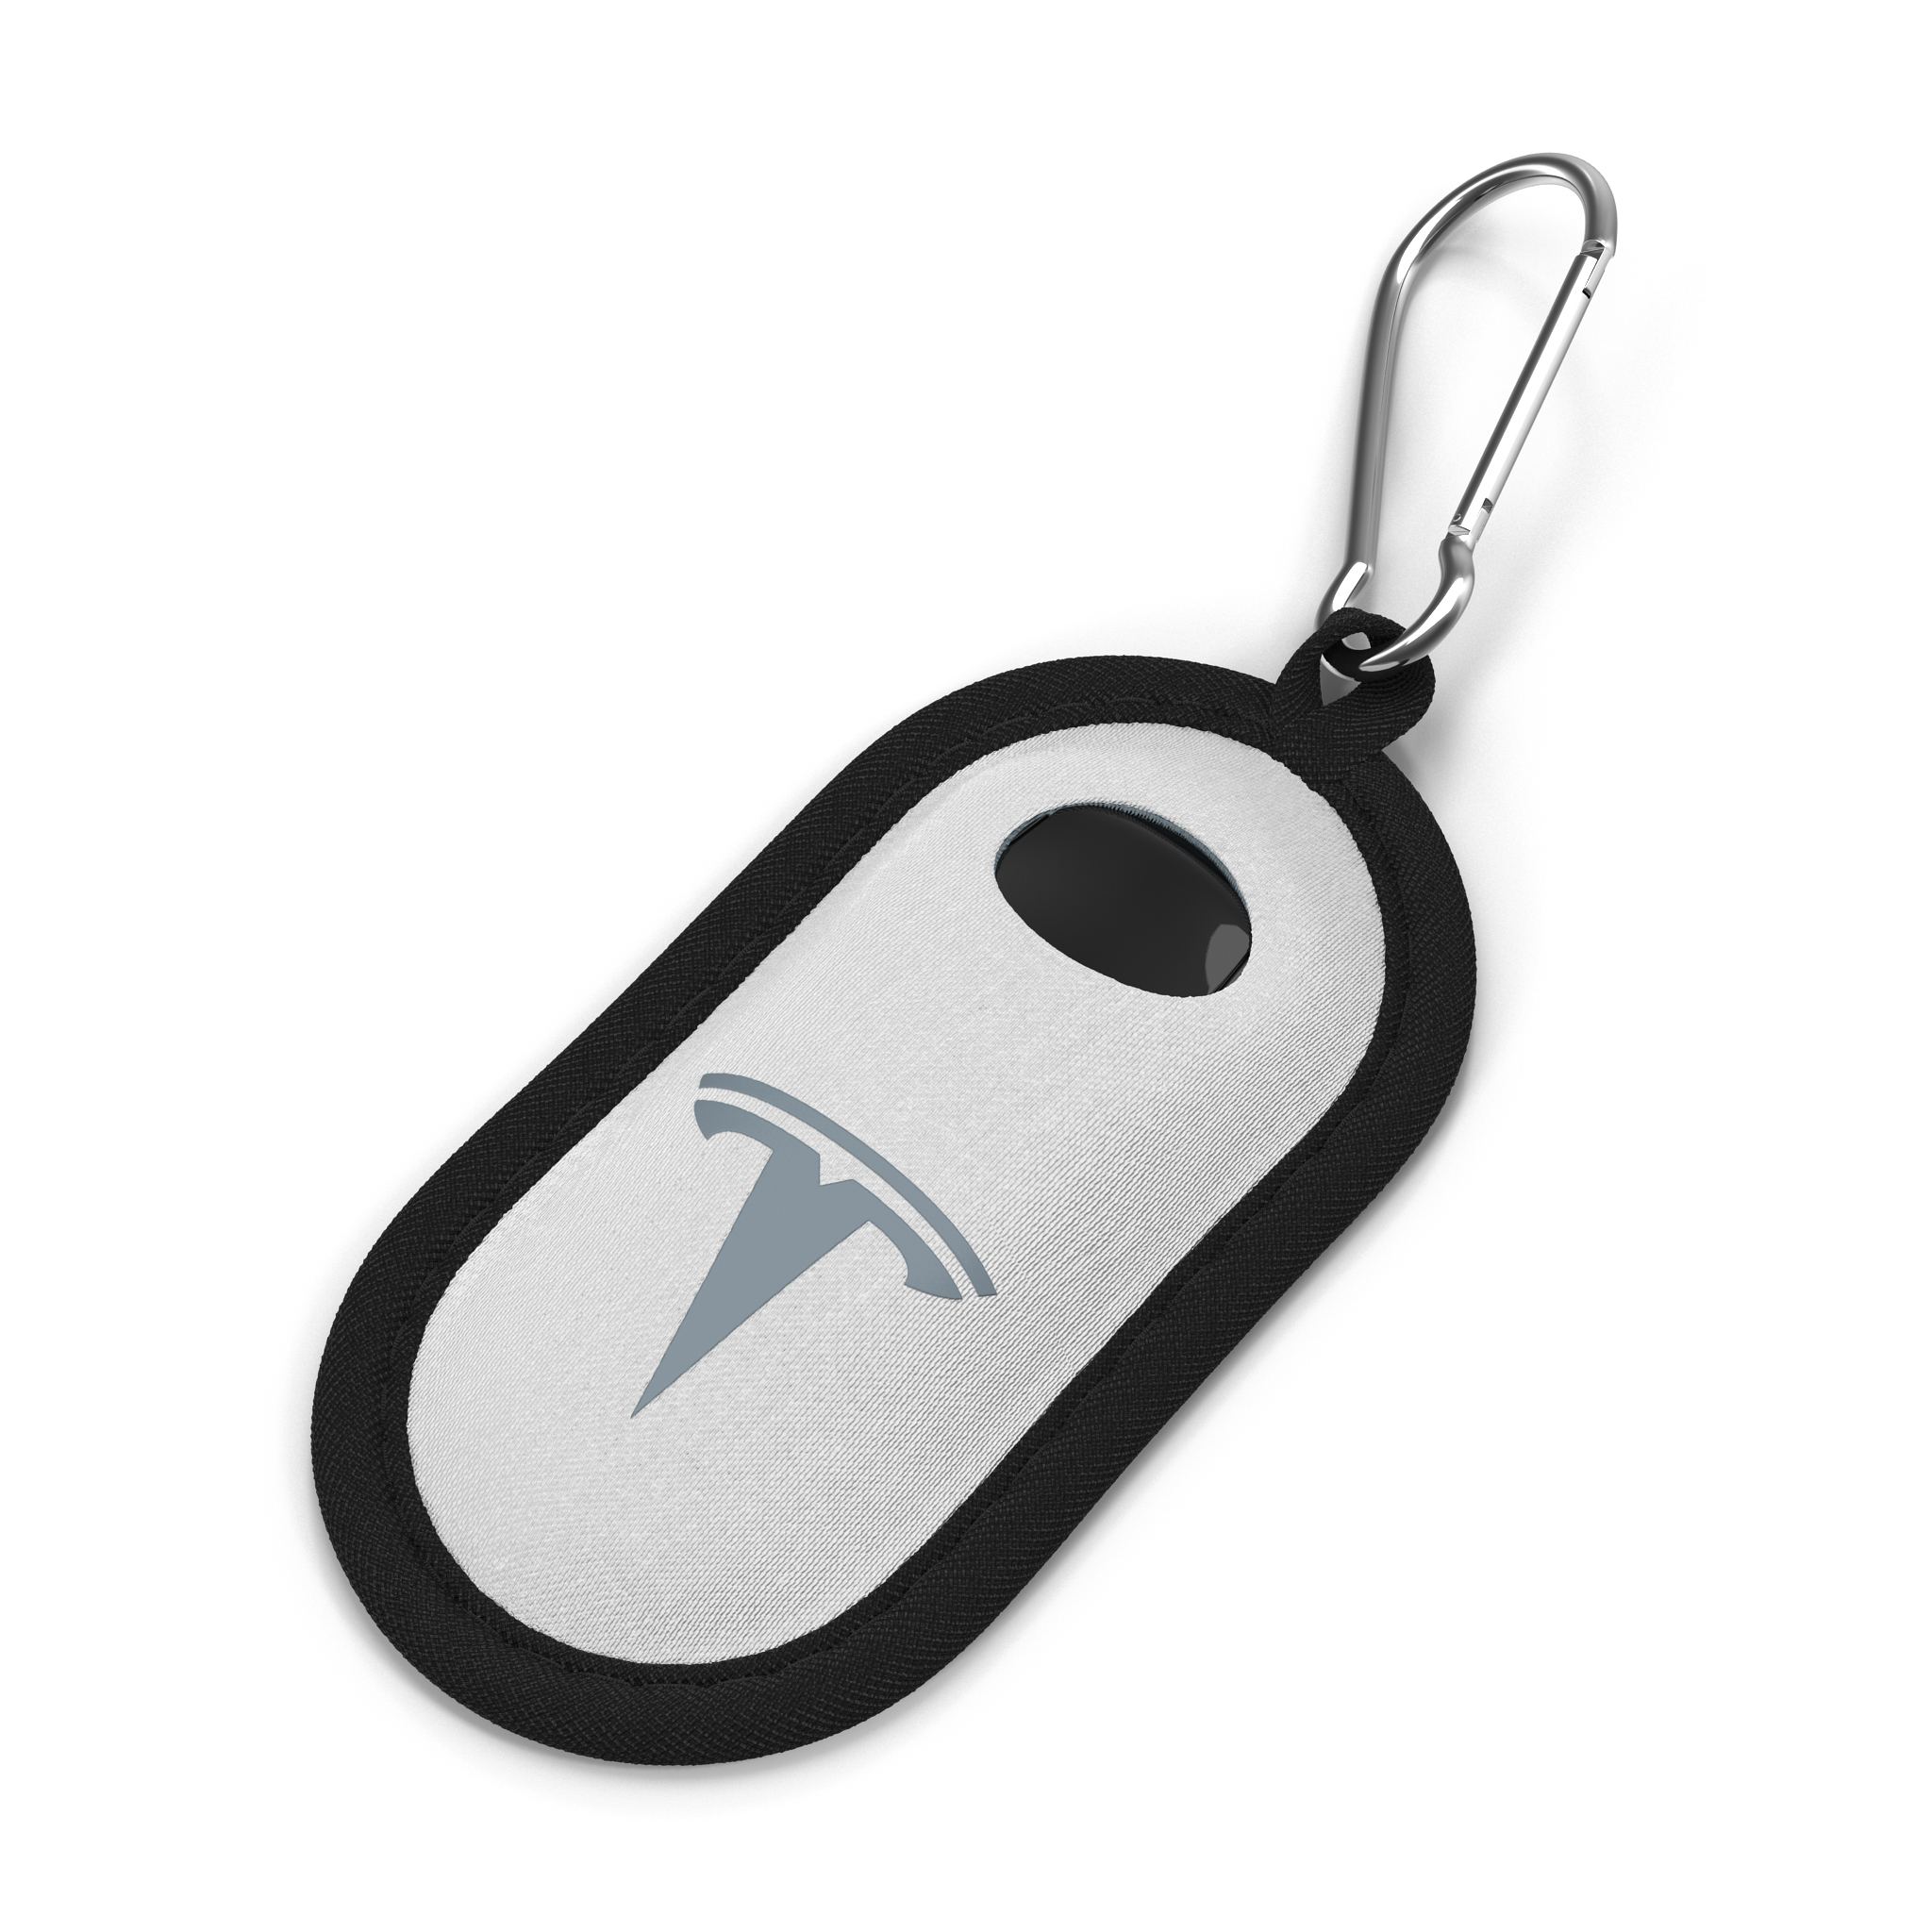 Tesla Key Fob Inside White Cover